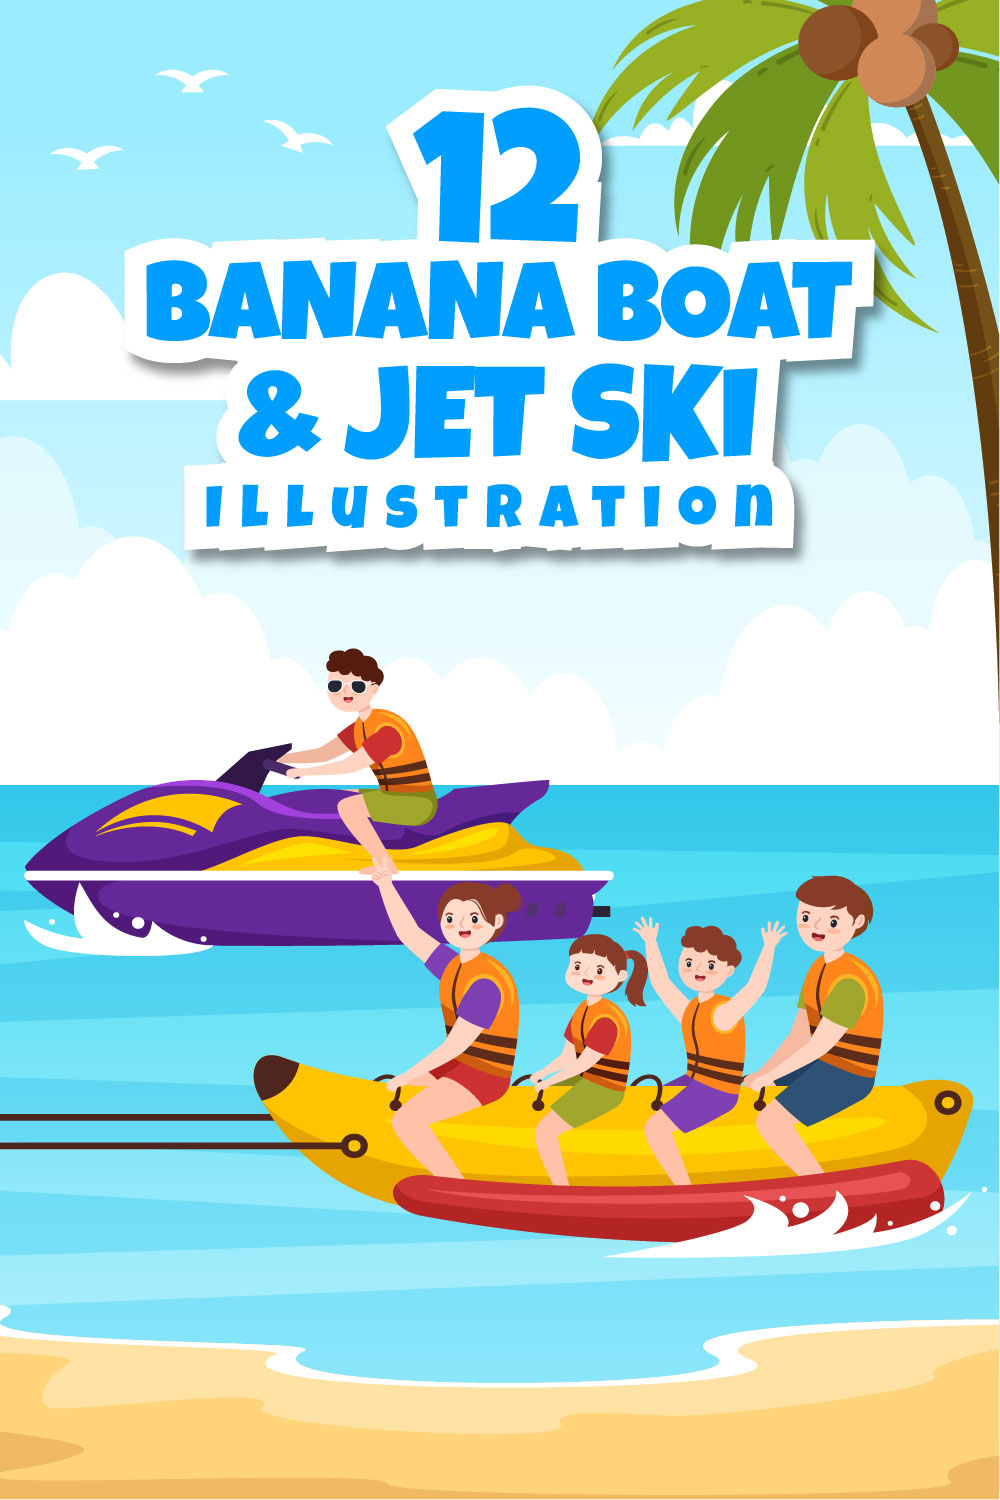 12 Playing Banana Boat and Jet Ski Illustration pinterest image.